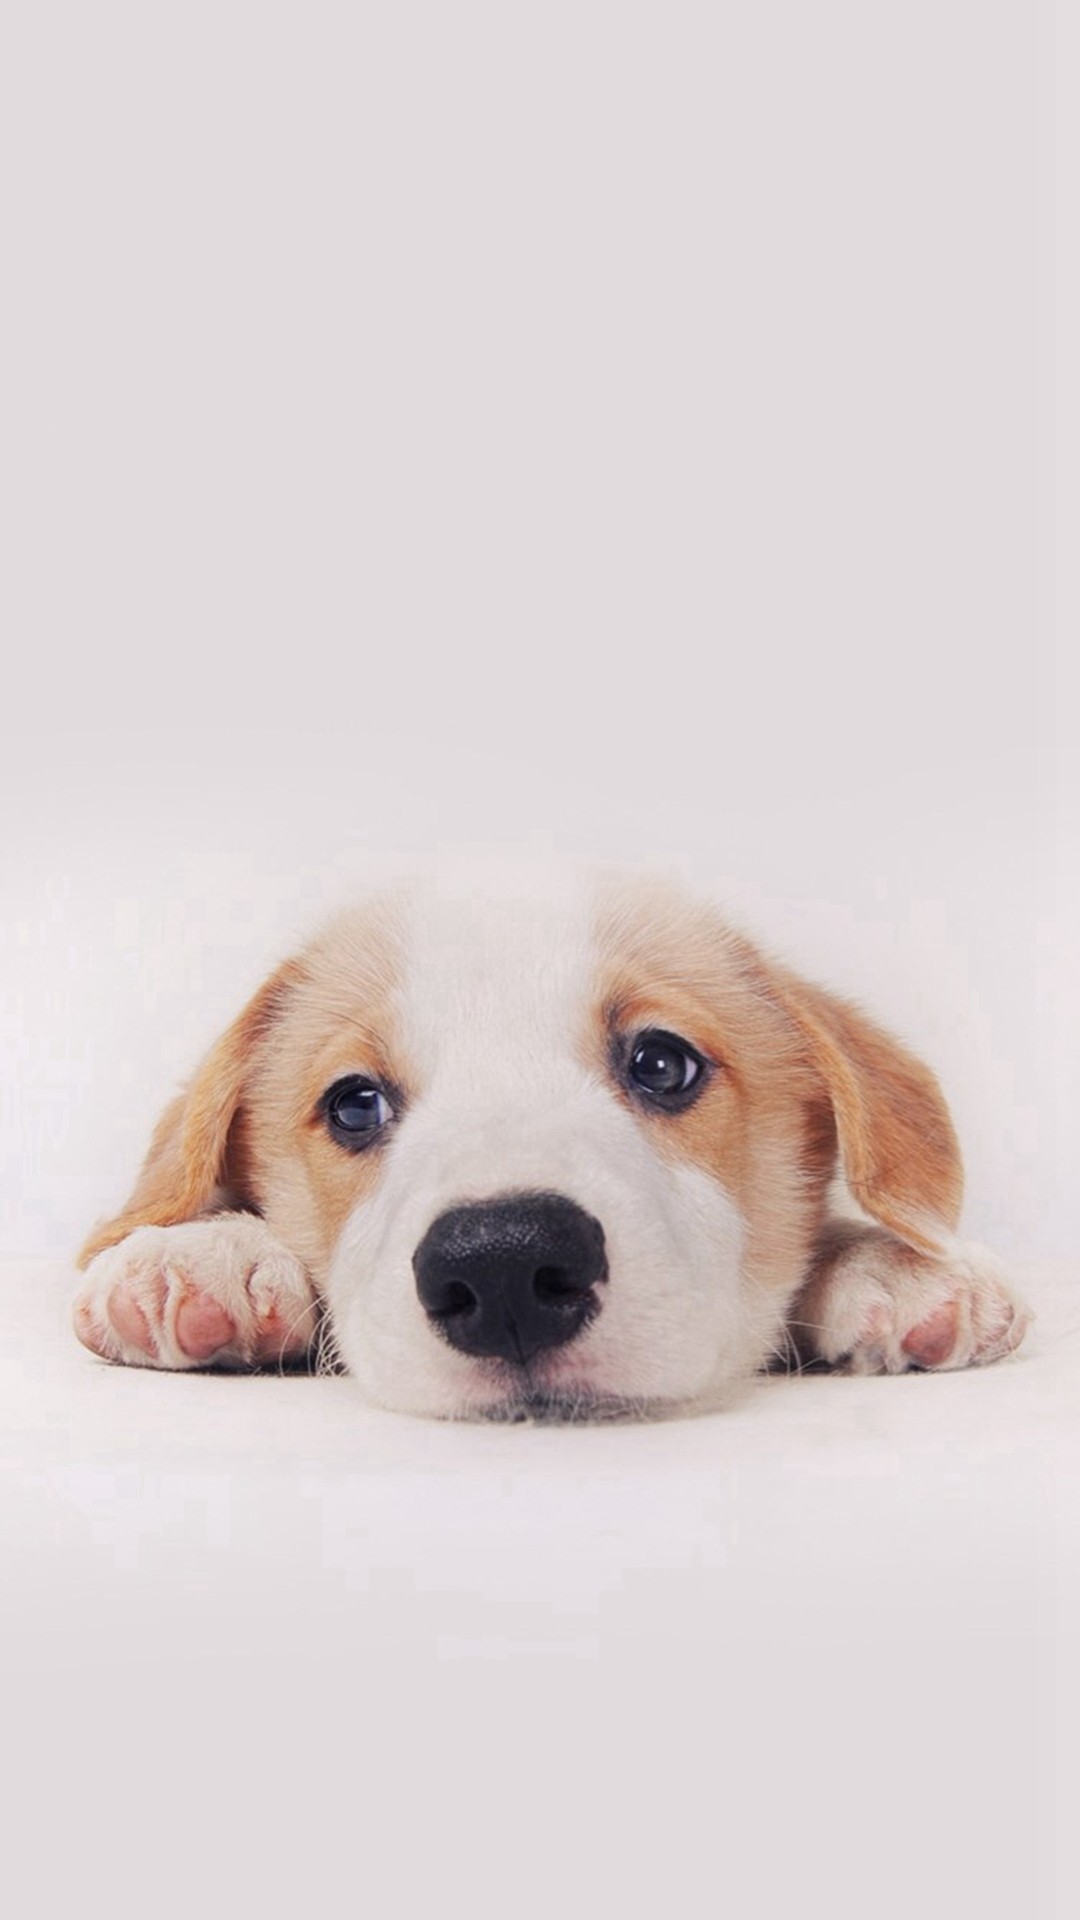 1080x1920 Cute Puppy Dog Pet #iPhone #6 #plus #wallpaper